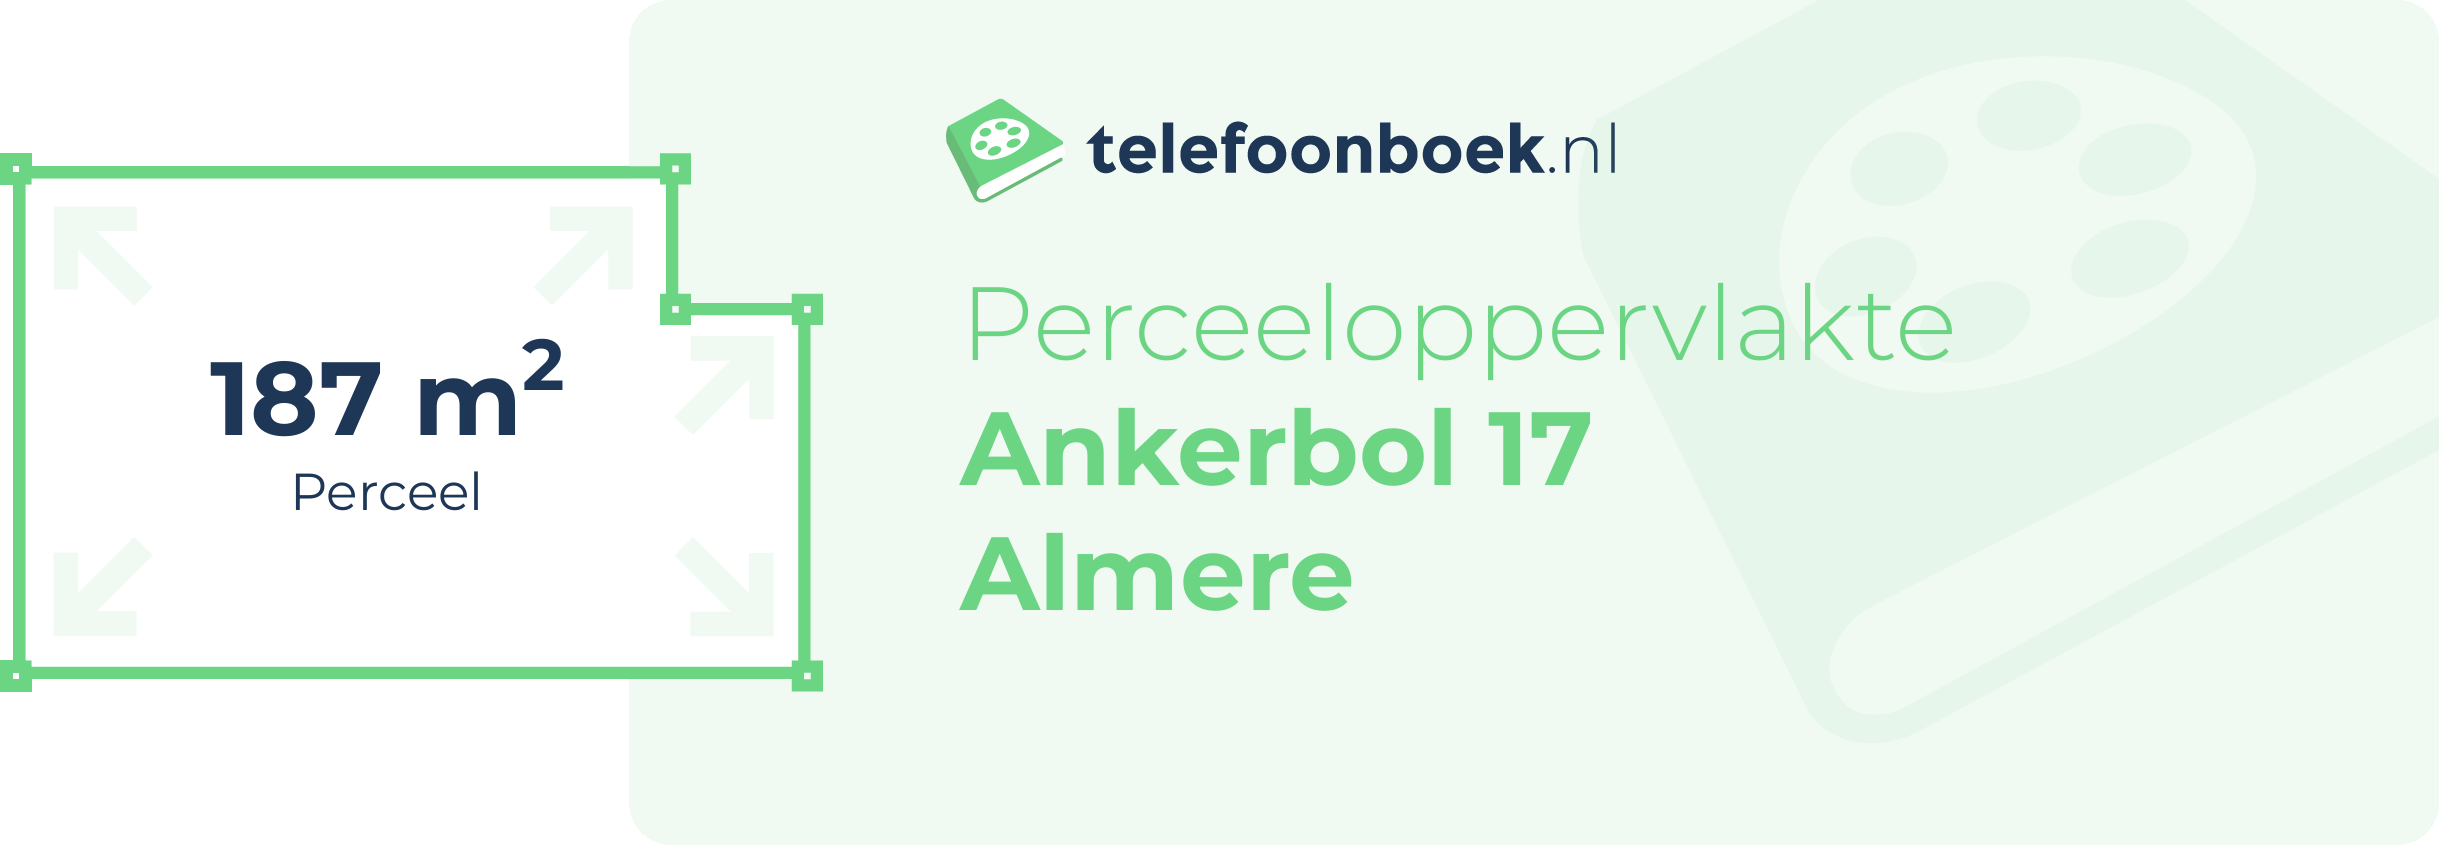 Perceeloppervlakte Ankerbol 17 Almere